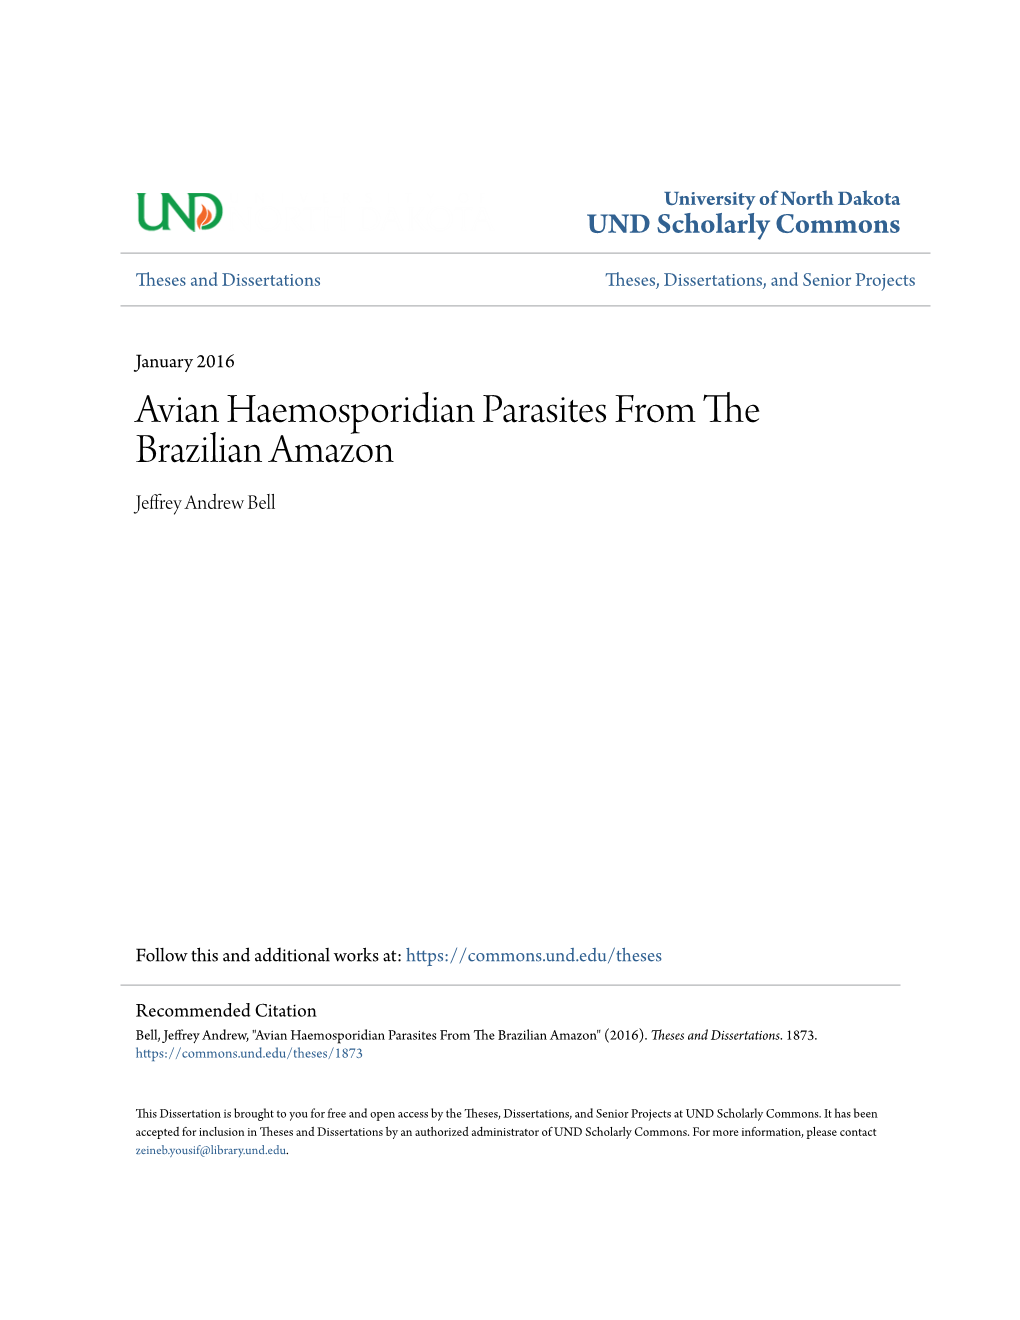 Avian Haemosporidian Parasites from the Brazilian Amazon Jeffrey Andrew Bell